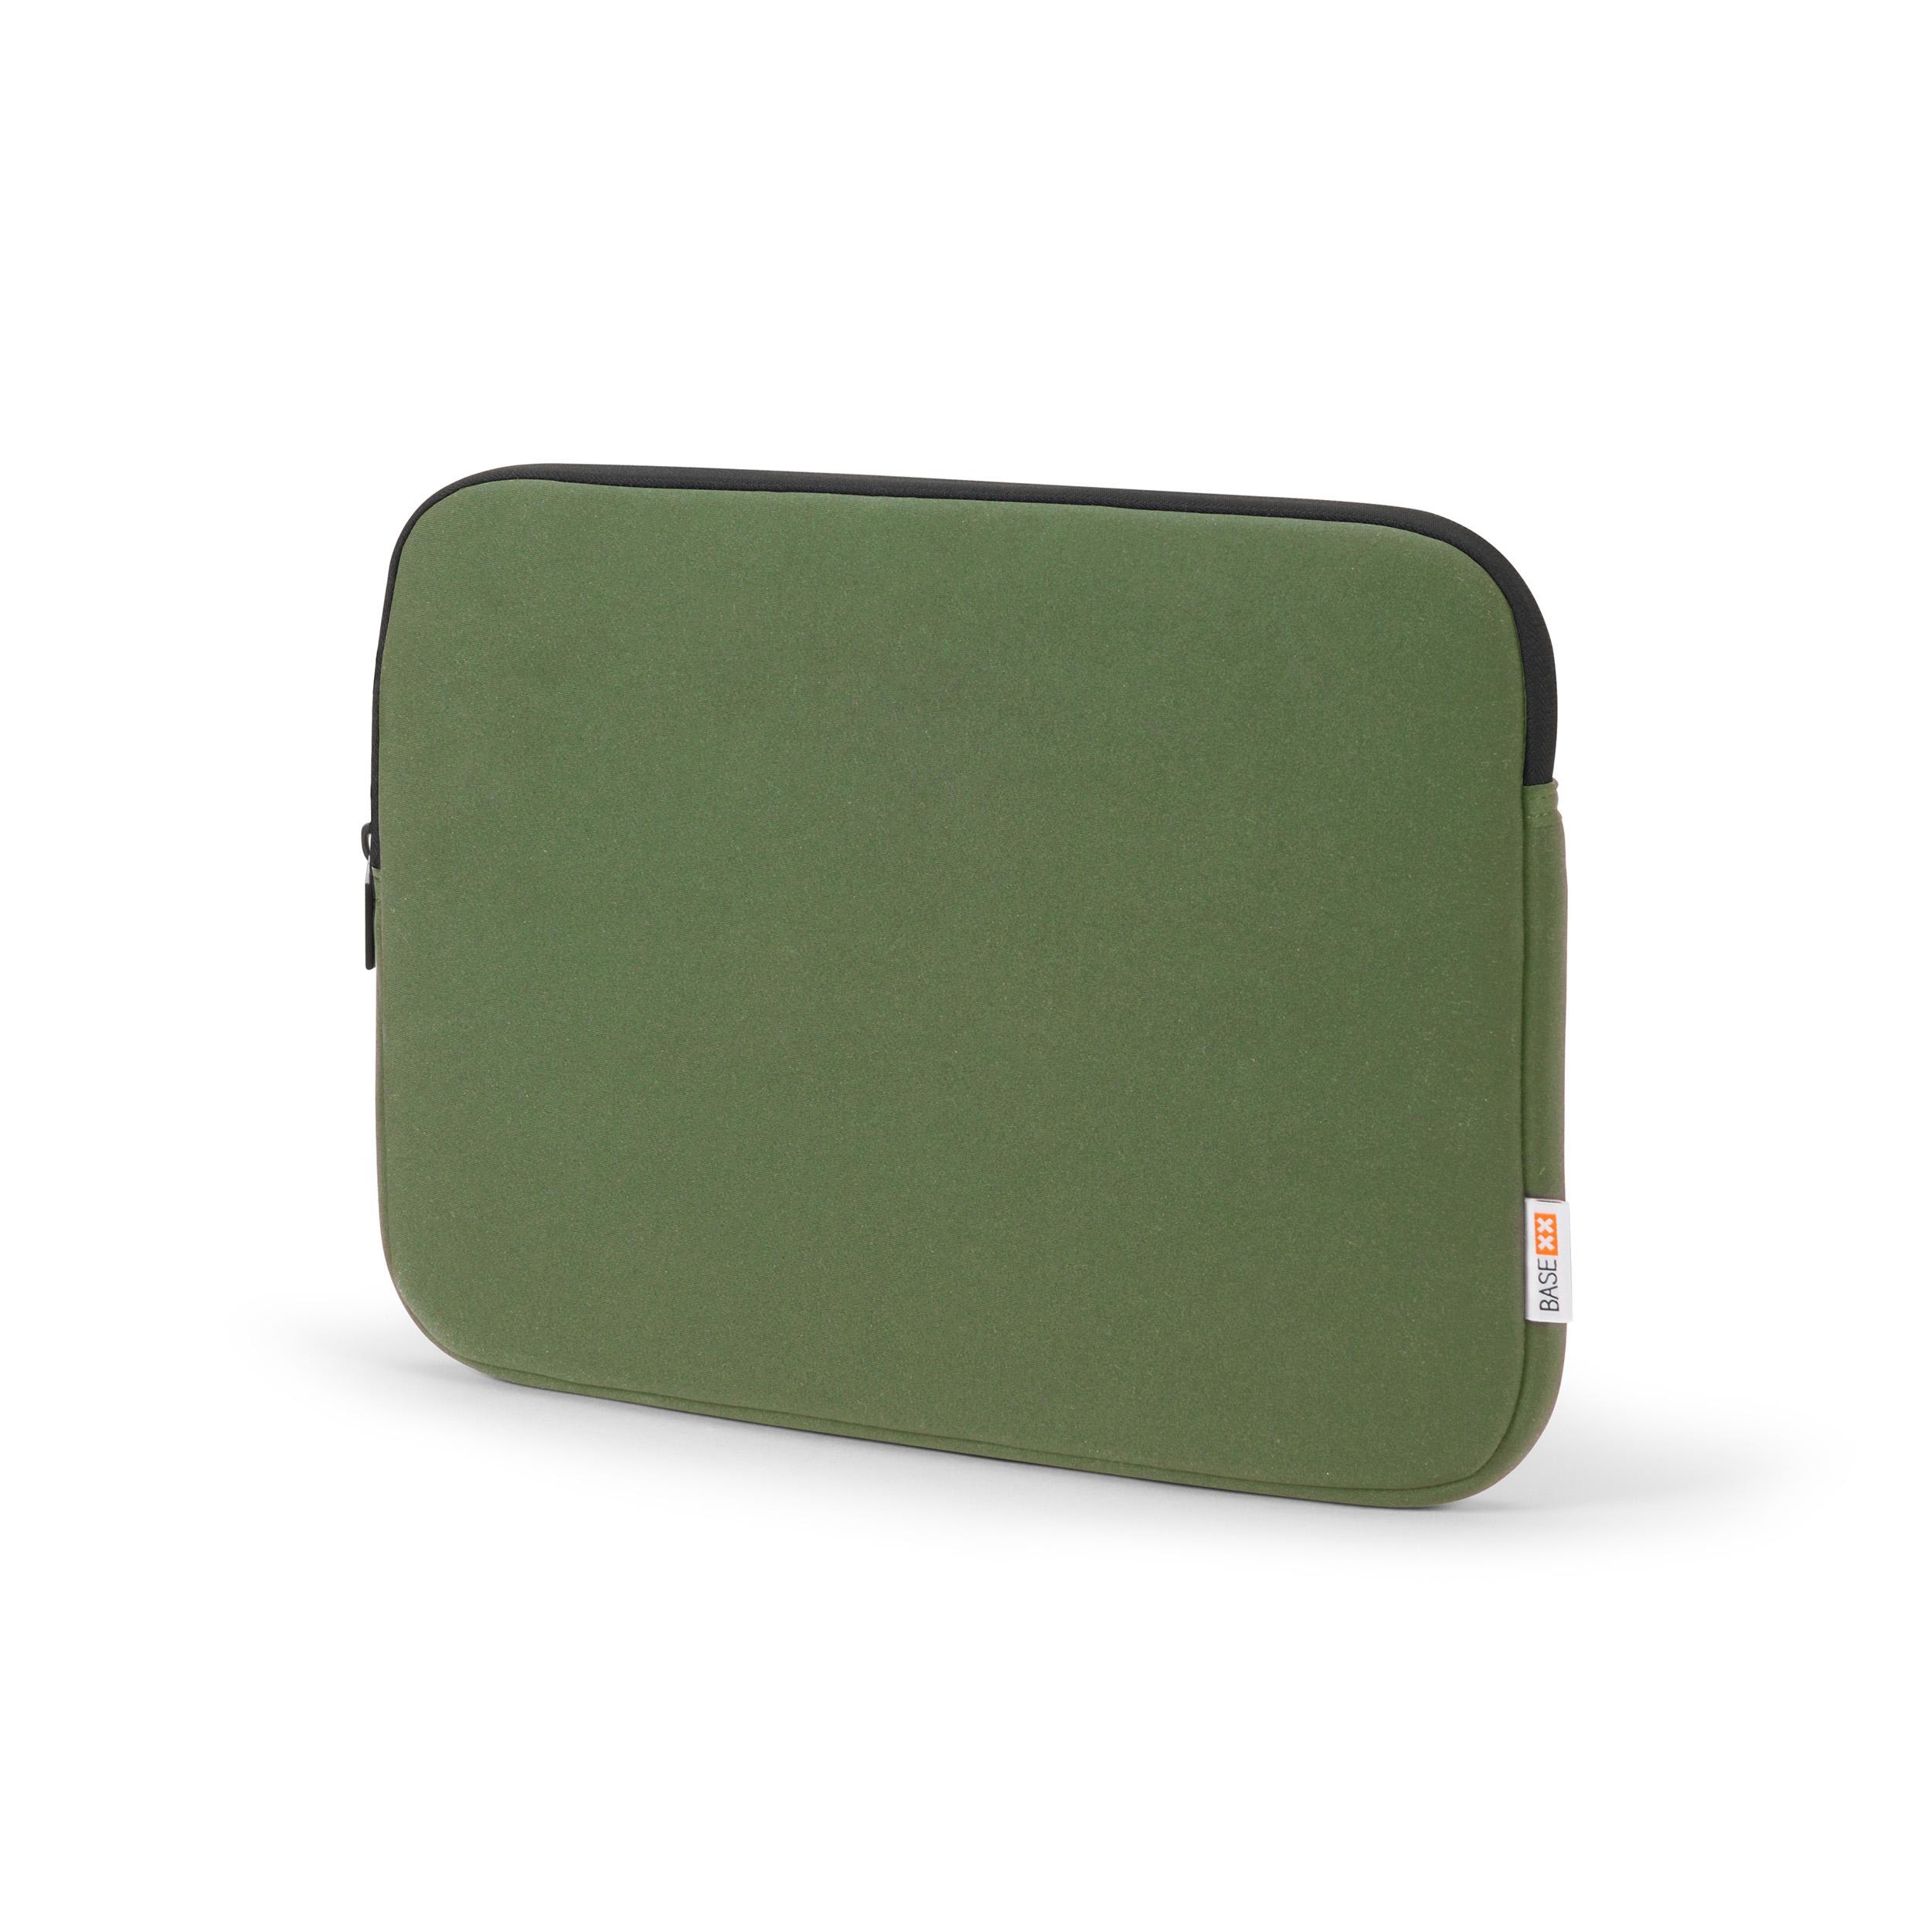 Dicota BASE XX Sleeve 14-14.1 inch Laptop sleeve Groen